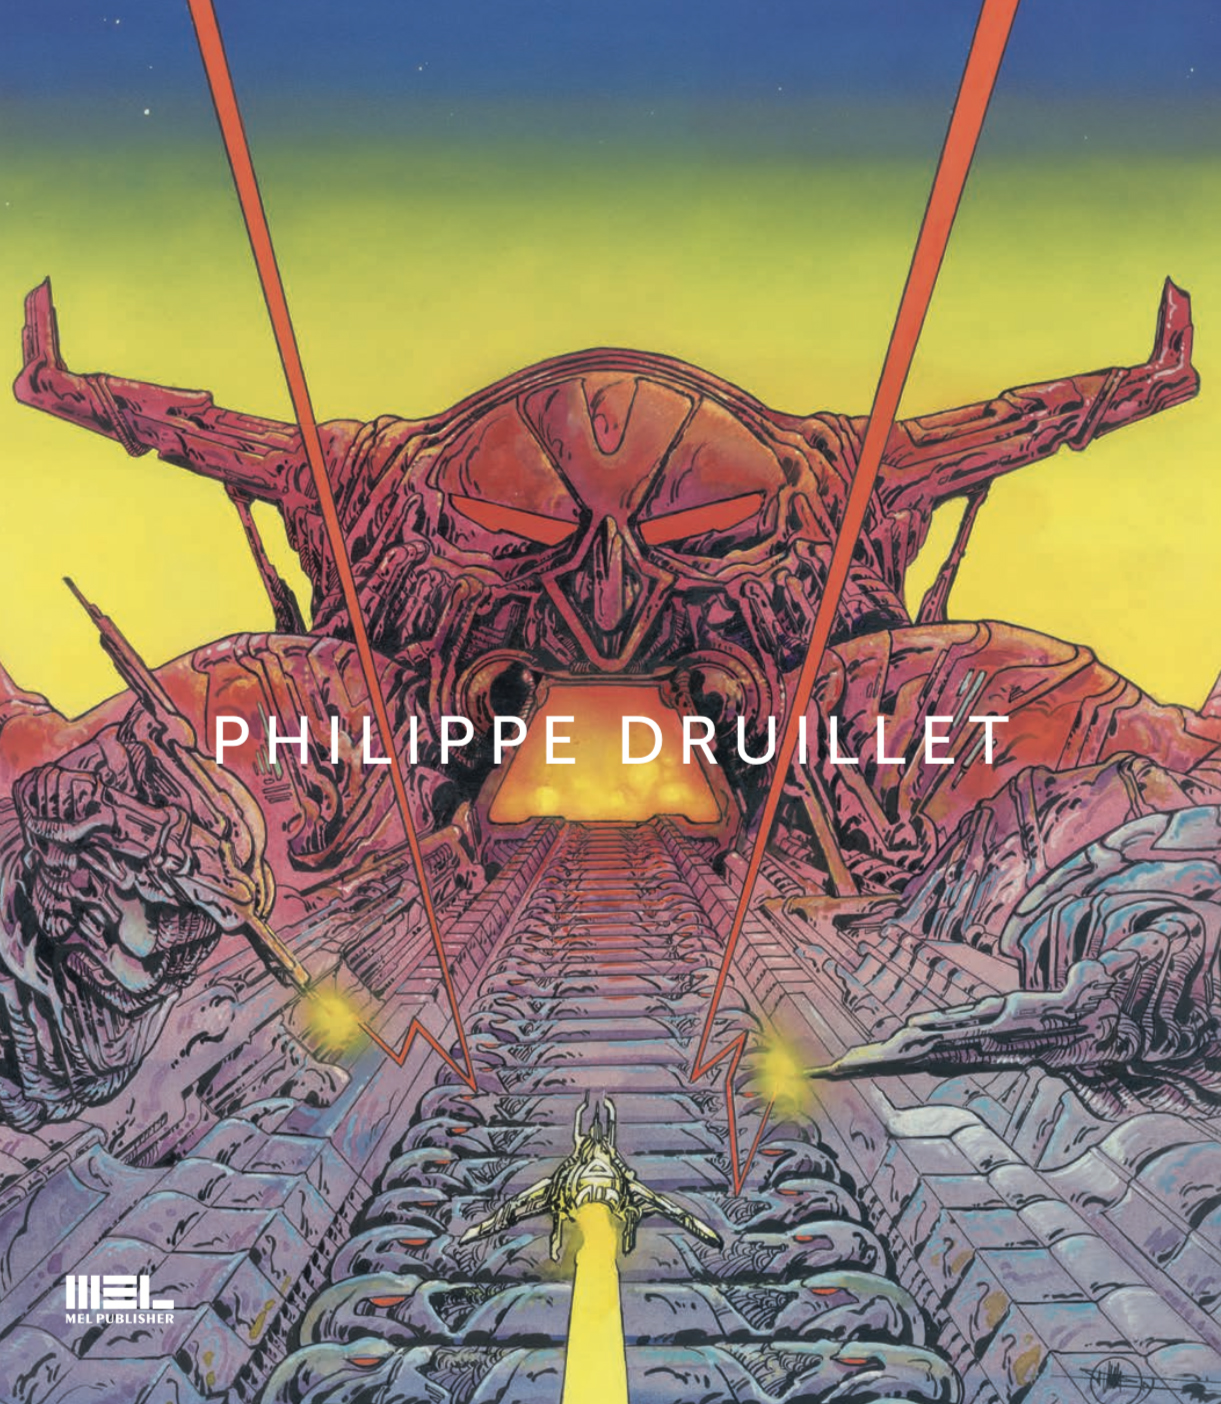 Philippe DRUILLET - PHILIPPE DRUILLET - MONOGRAPHIE, 2017